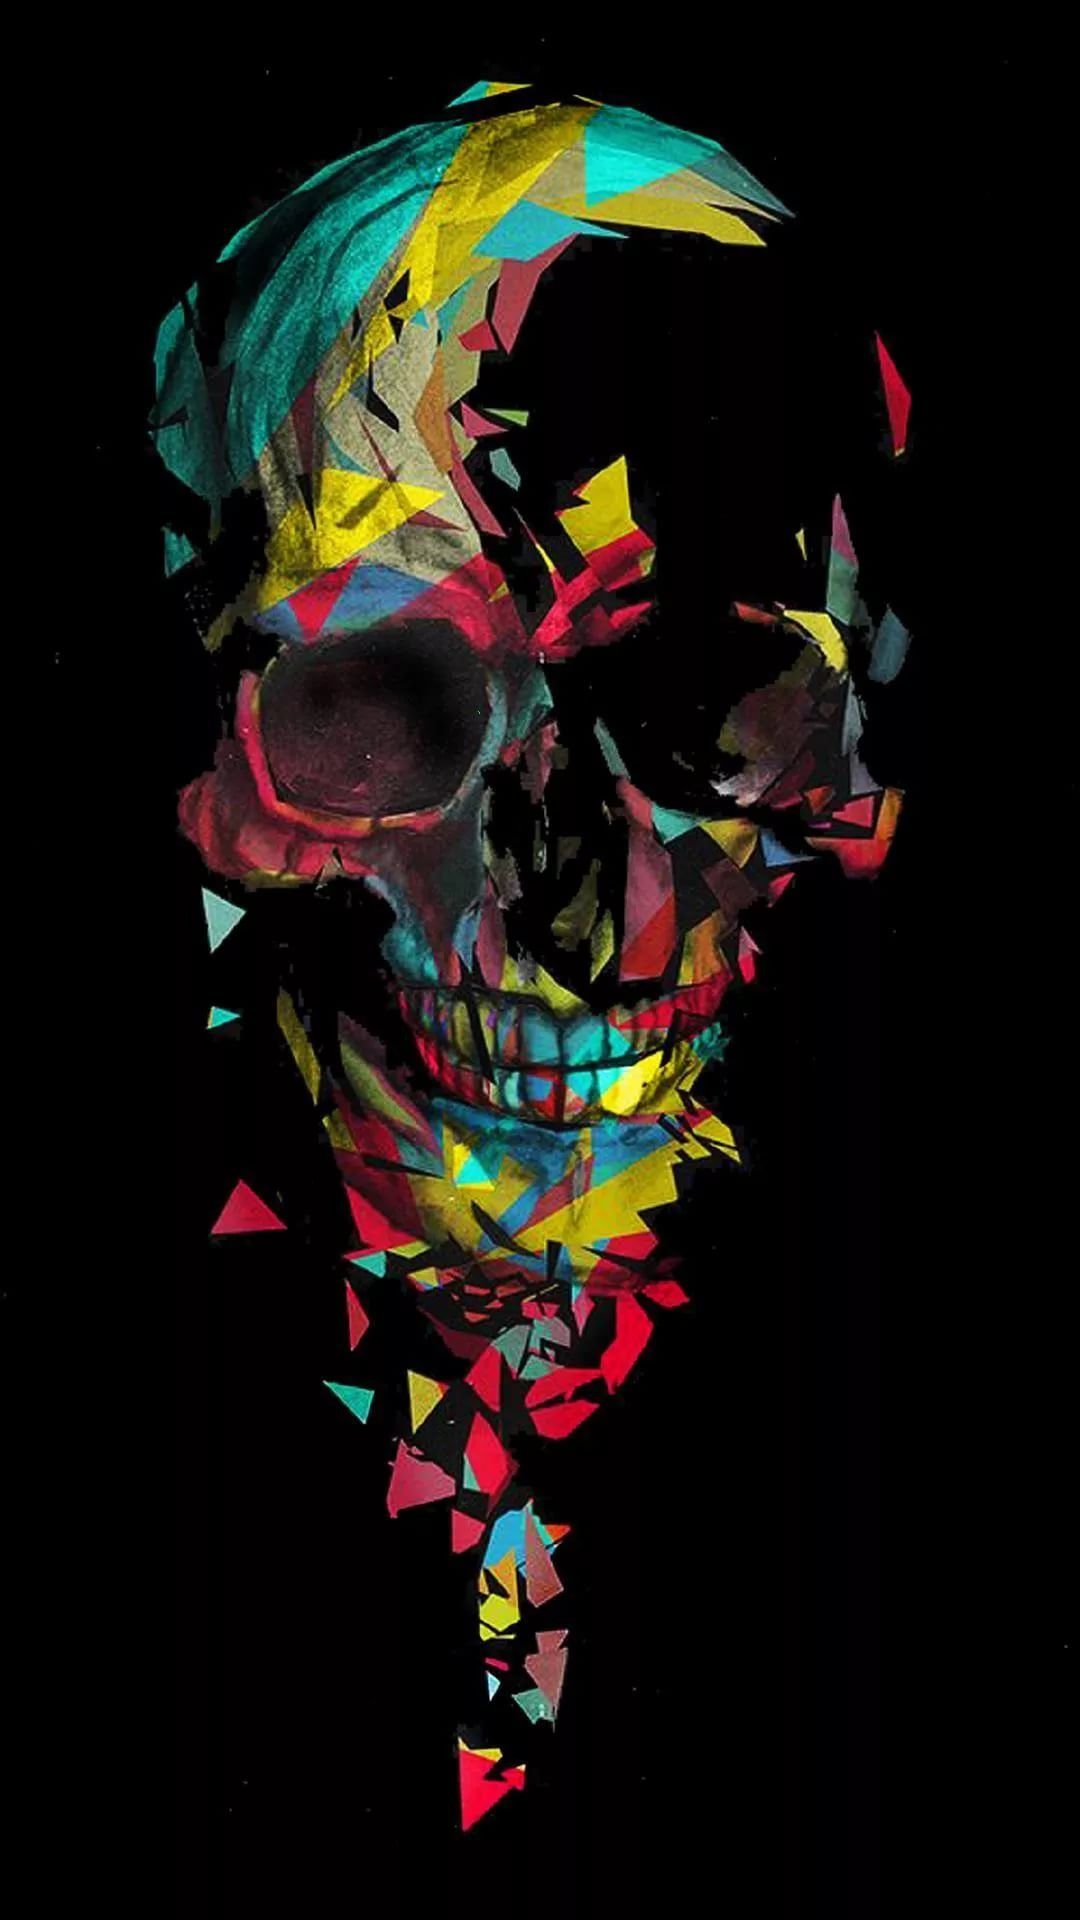 Cool Skull iPhone Wallpaper: Image